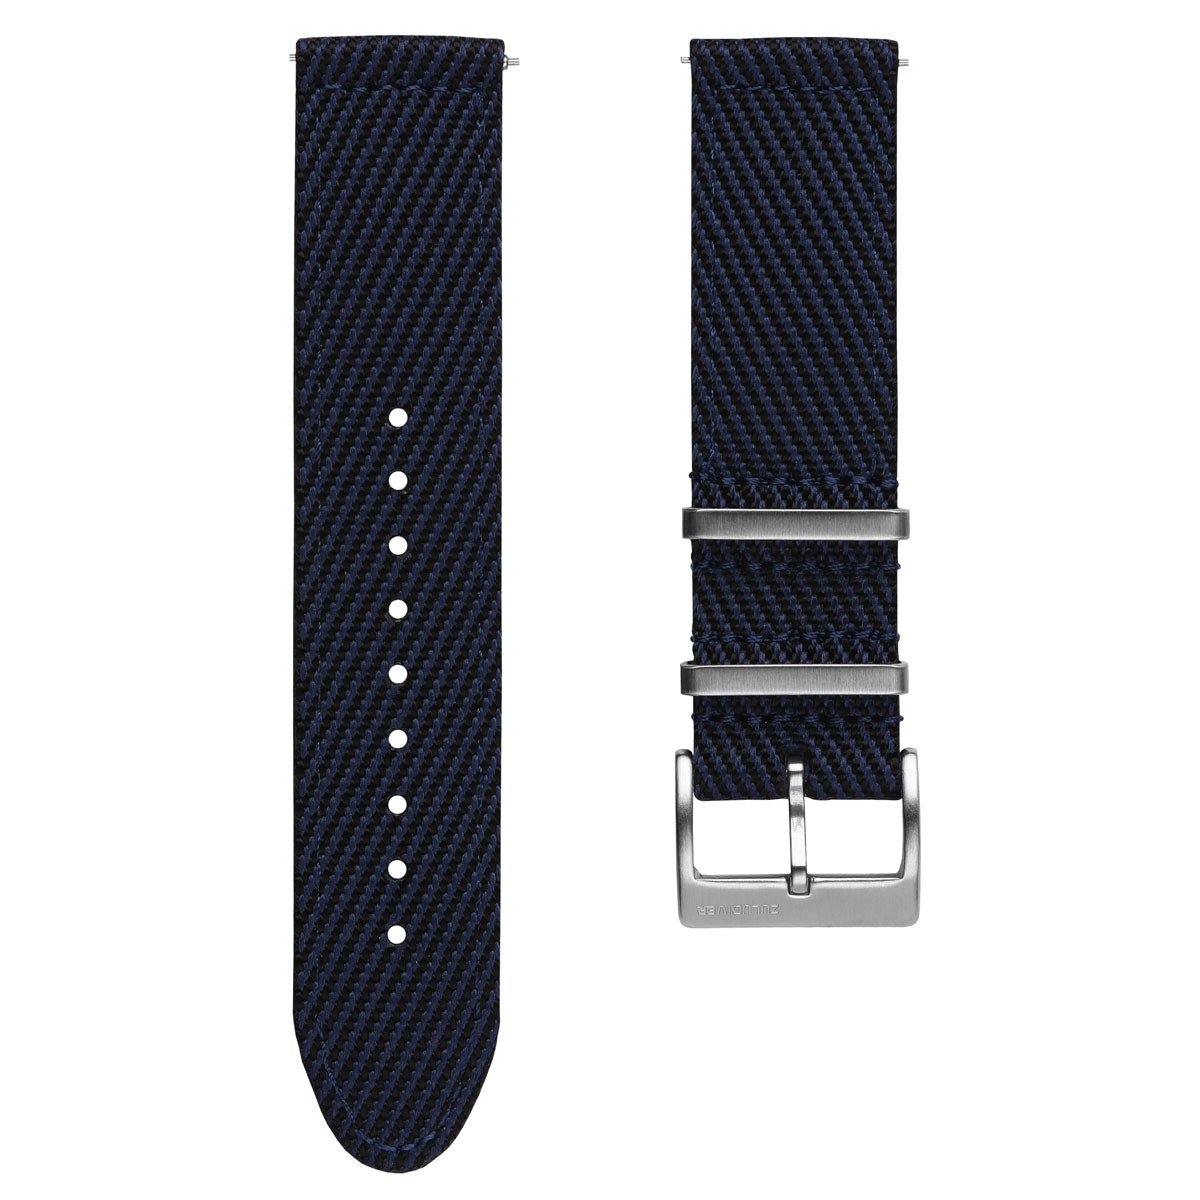 ZULUDIVER Seasalter Military Nylon Watch Strap - Black/Blue